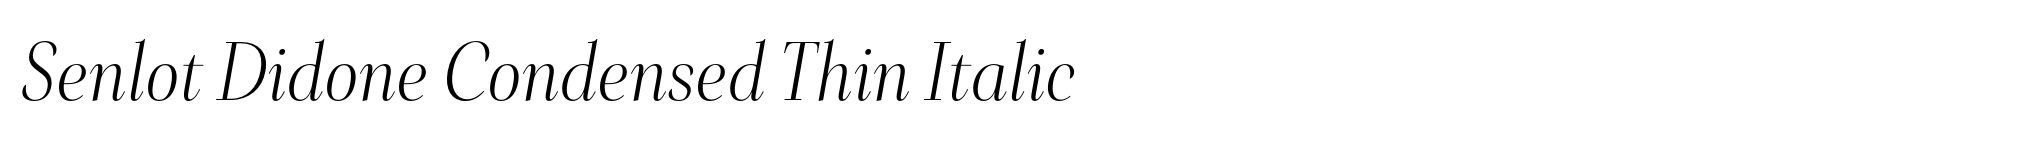 Senlot Didone Condensed Thin Italic image